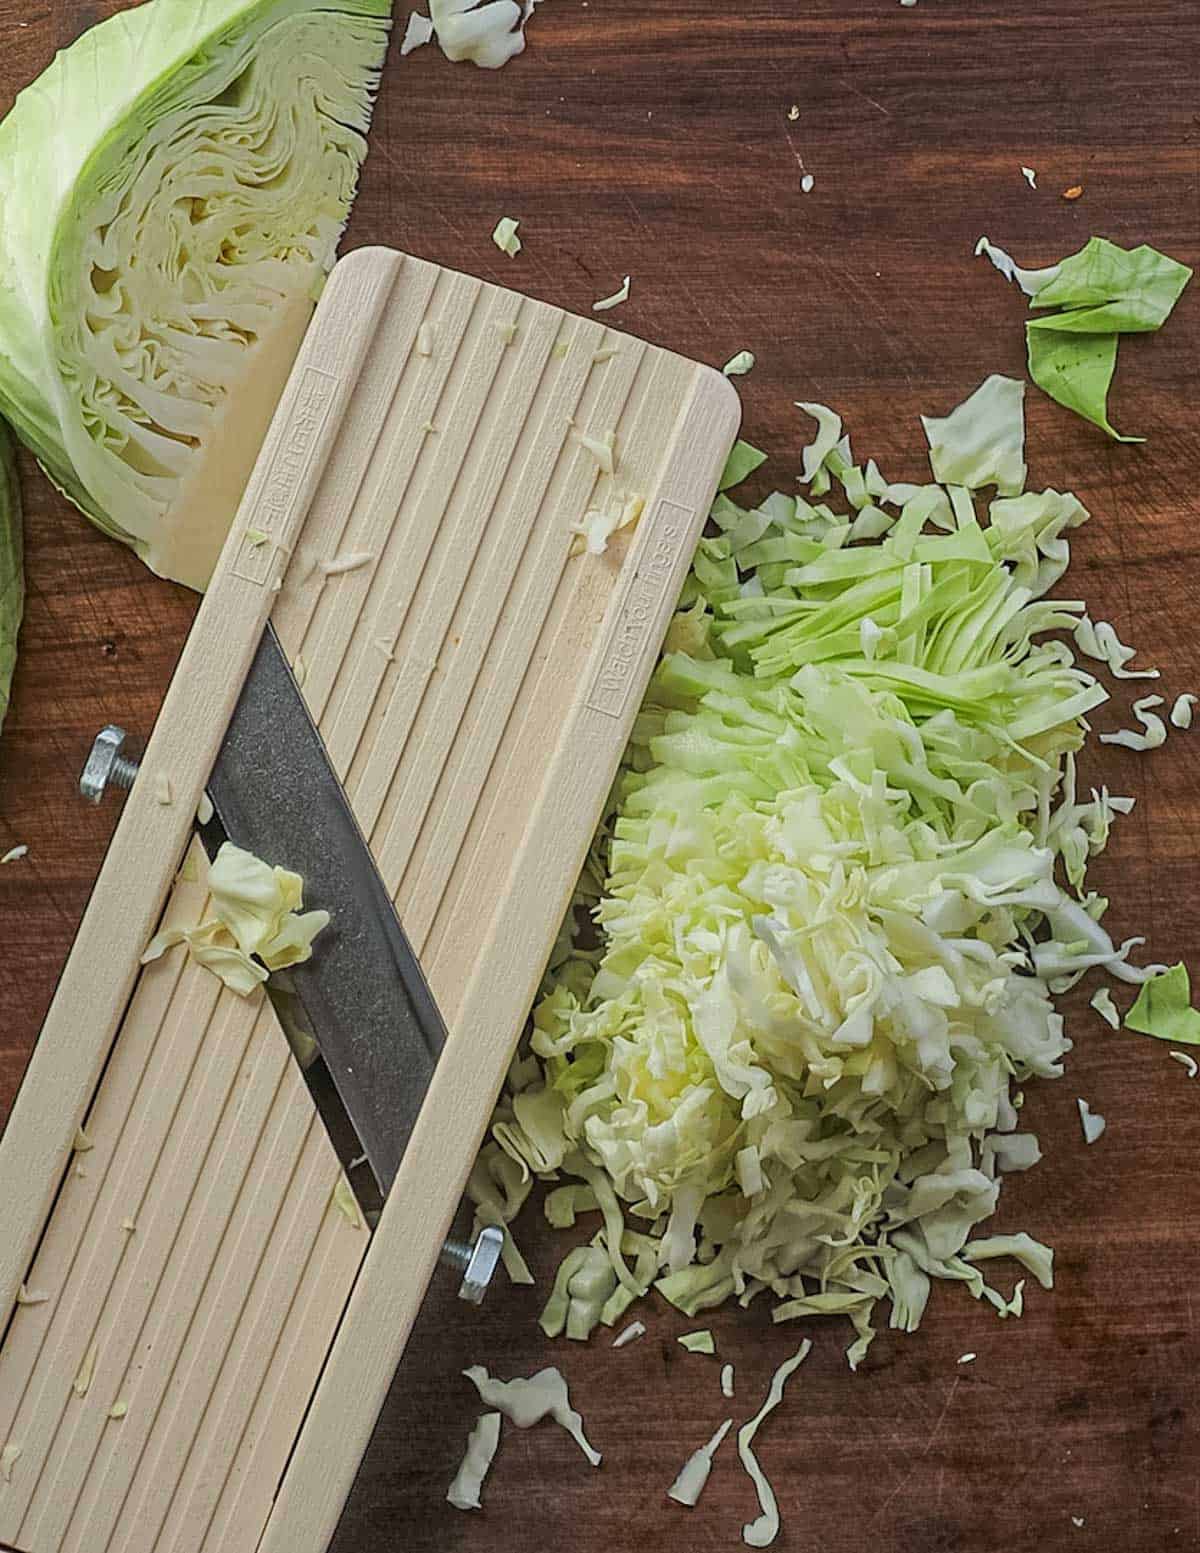 Shredding cabbage using a mandoline cabbage slicer. 